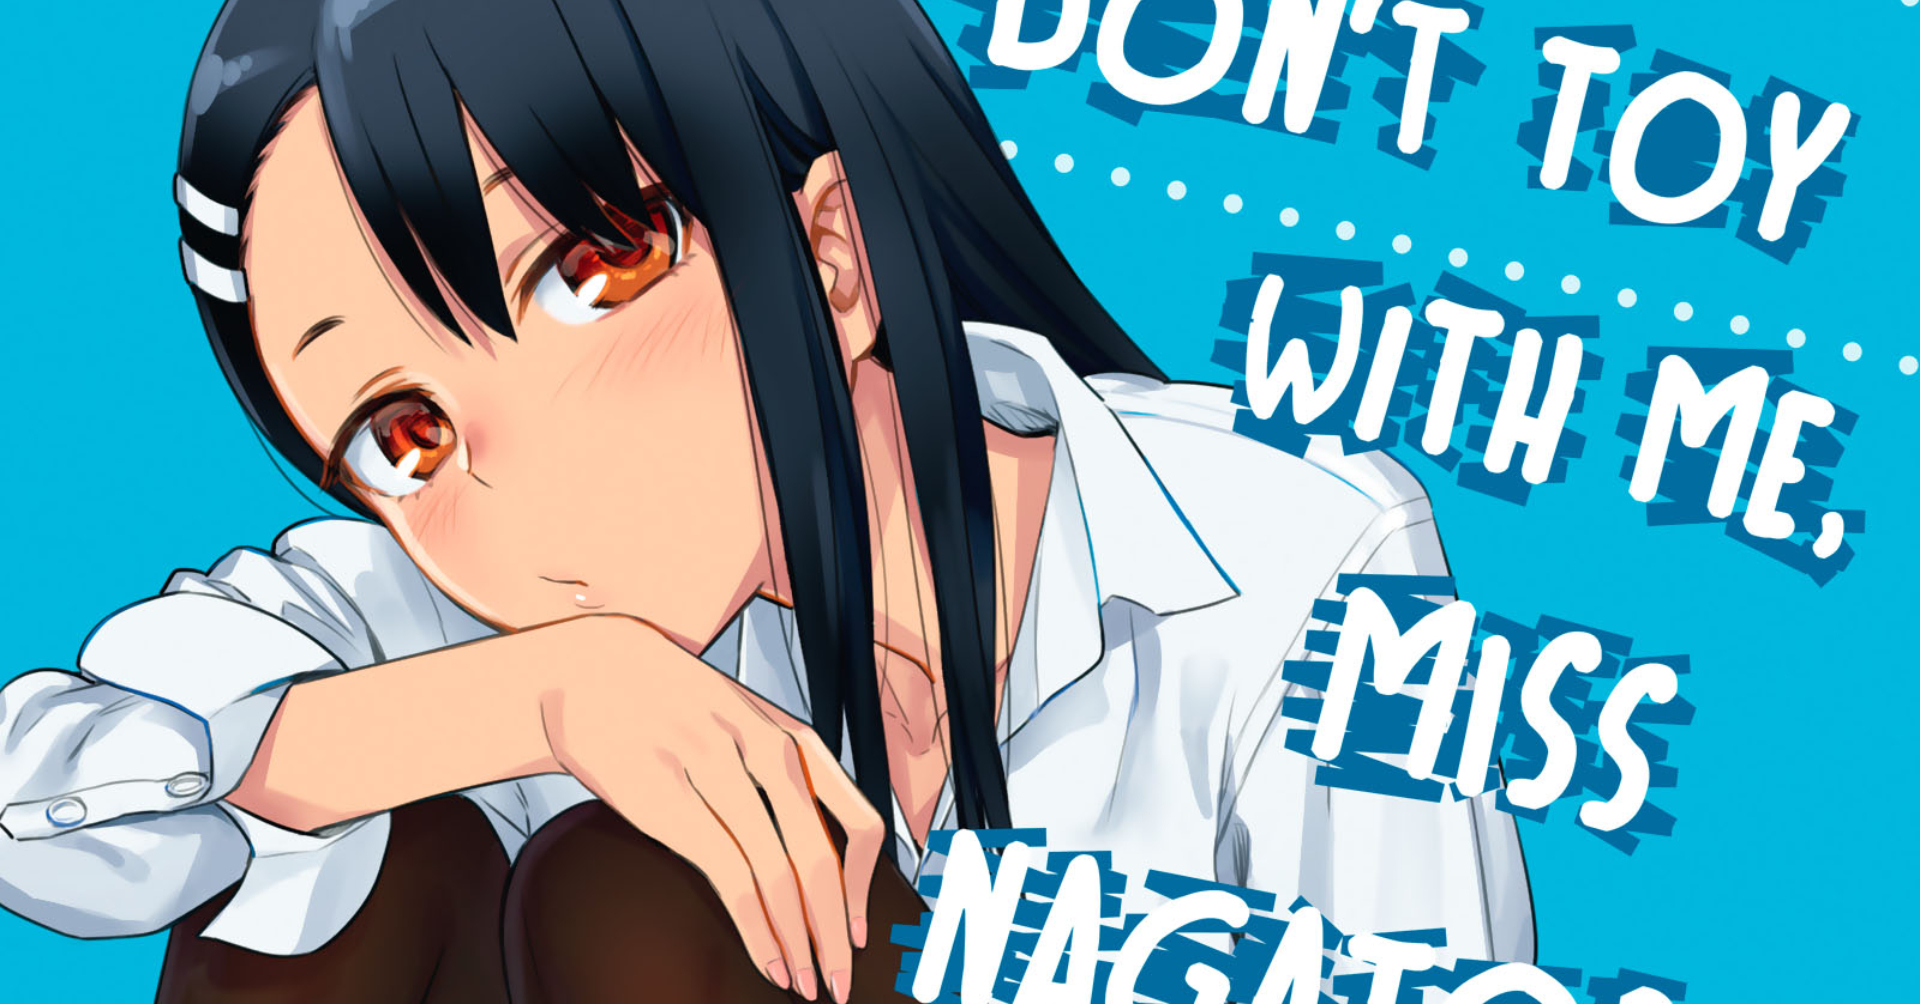 Don't Toy With Me, Miss Nagatoro 3 by Nanashi